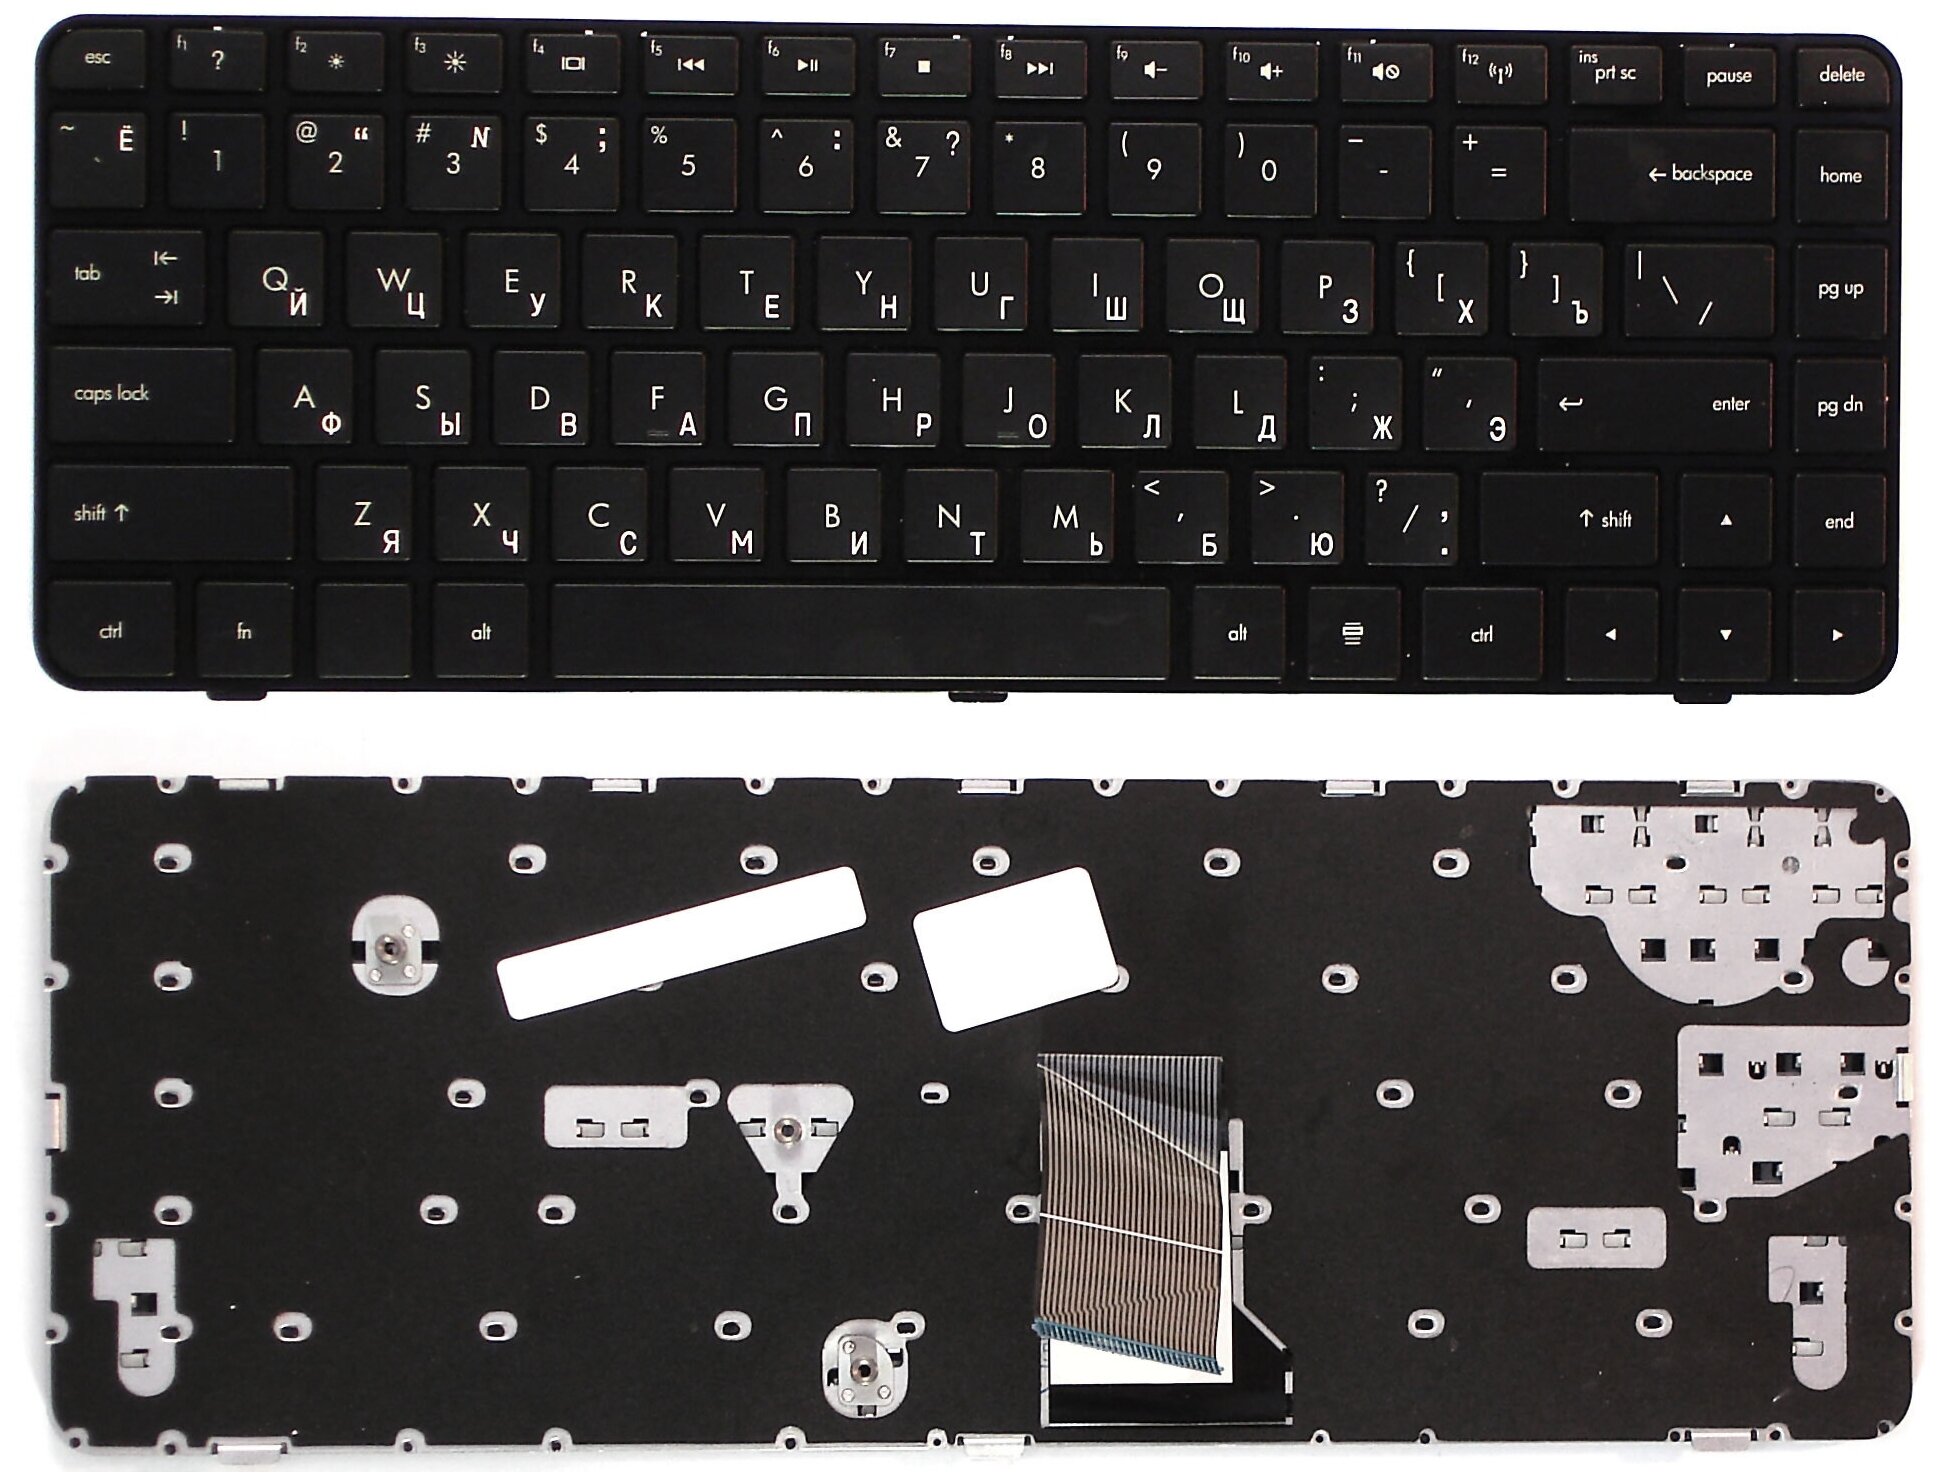 Клавиатура для ноутбука HP Pavilion DM4-2000 DM4-2015DX DM4-2100 черная